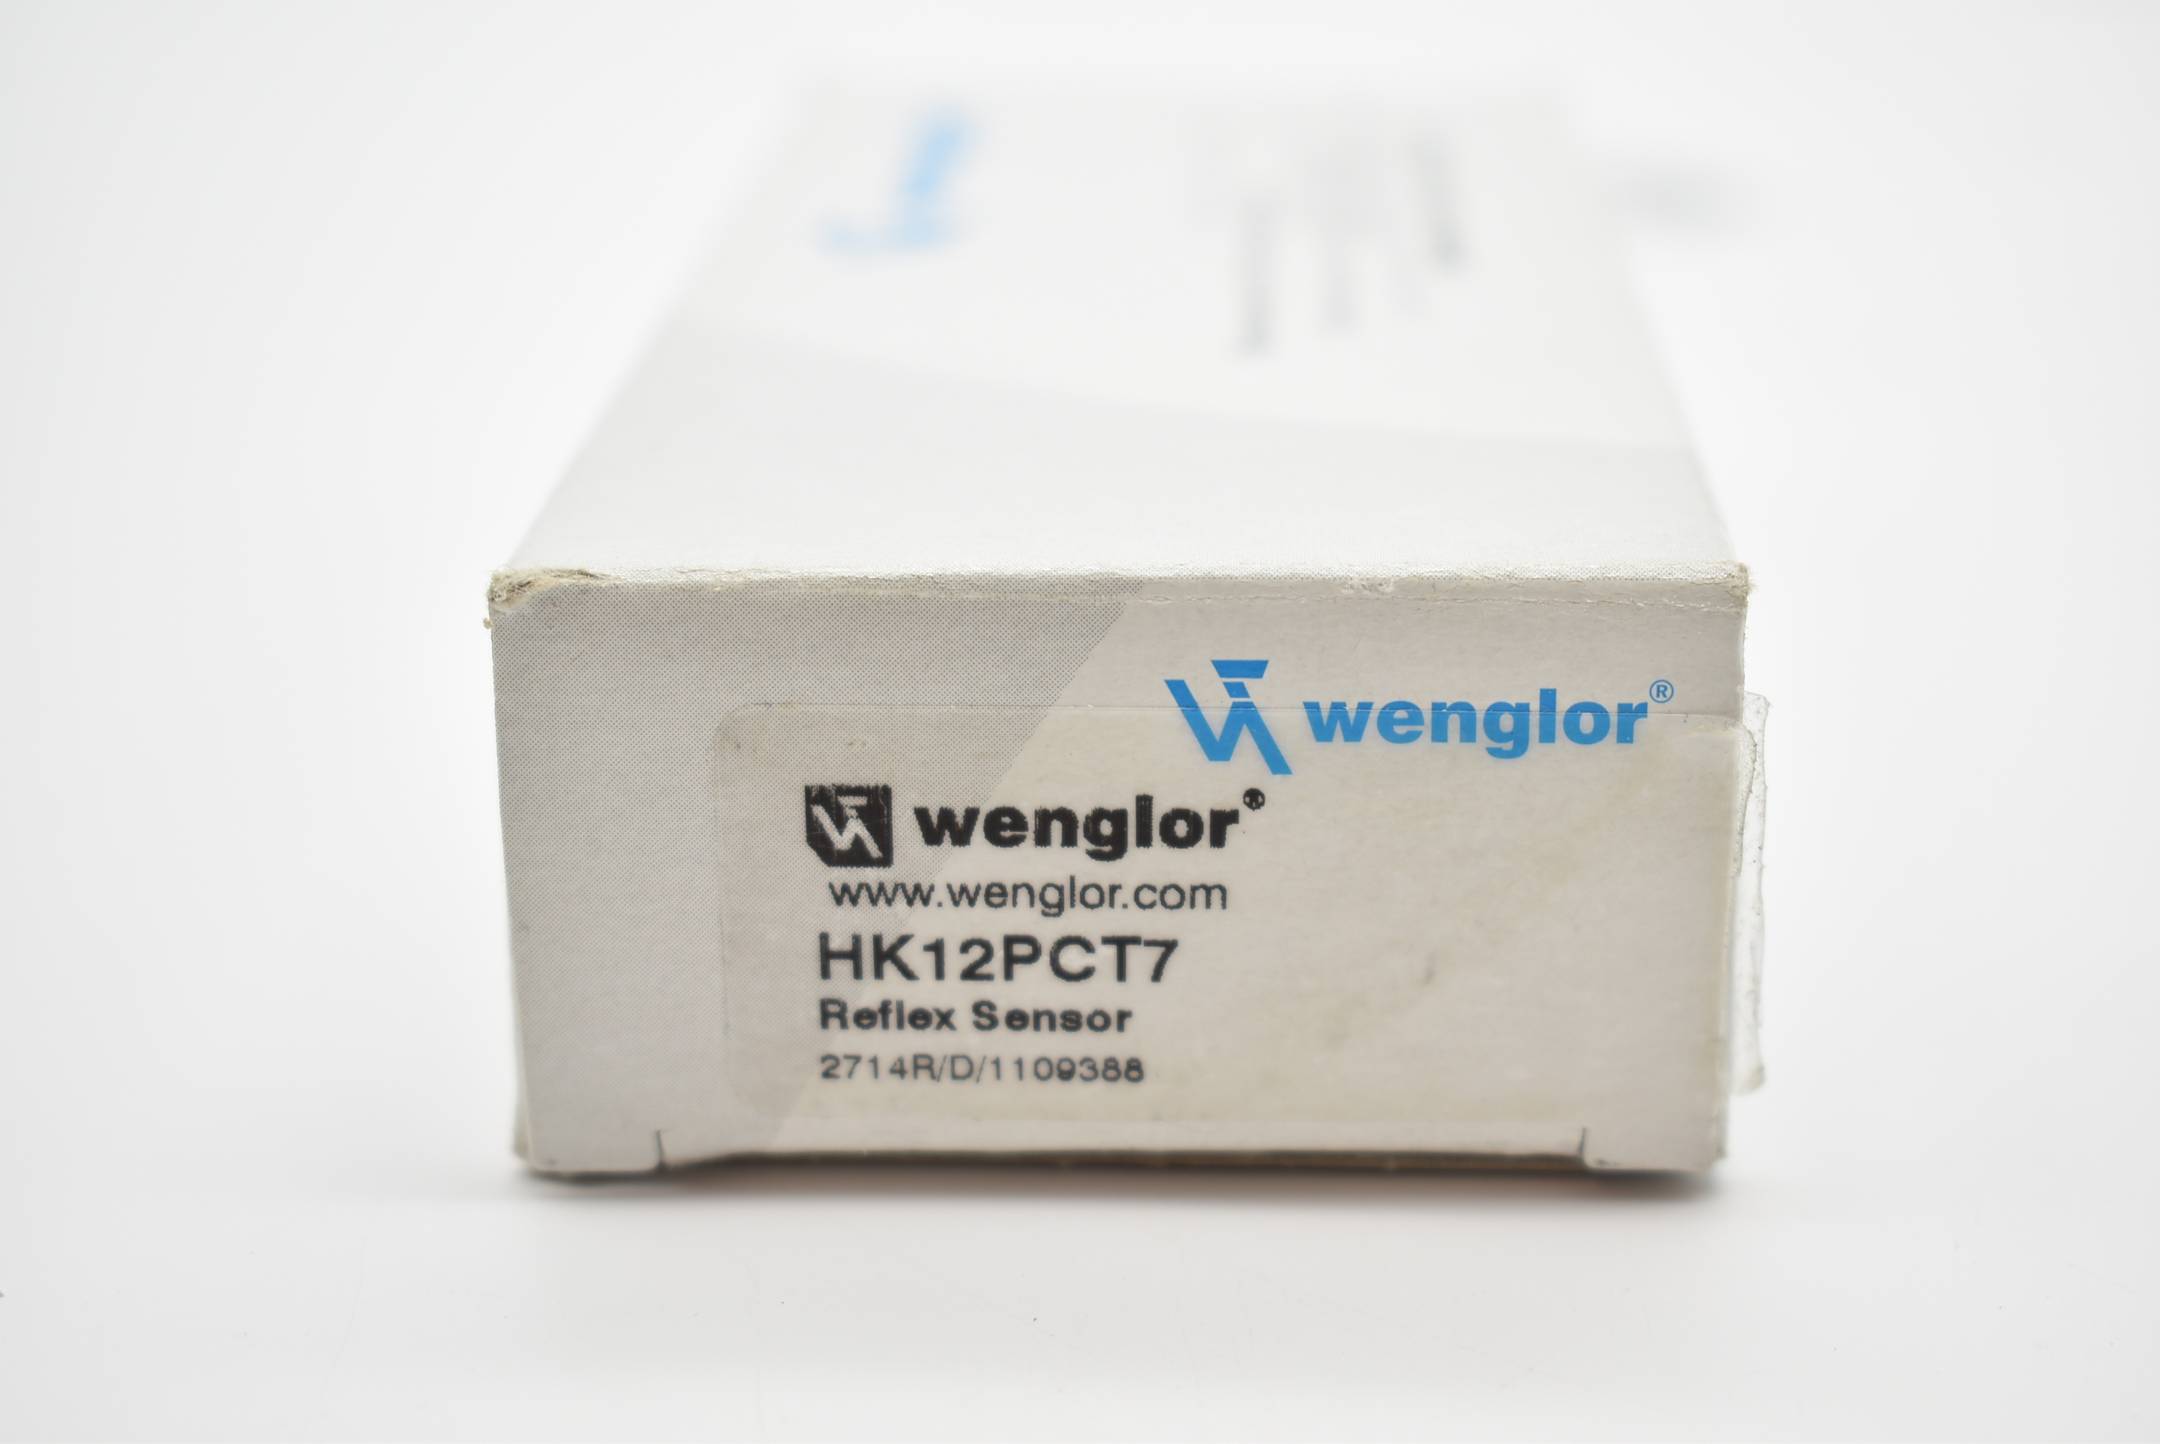 Wenglor Reflex Sensor HK12PCT7